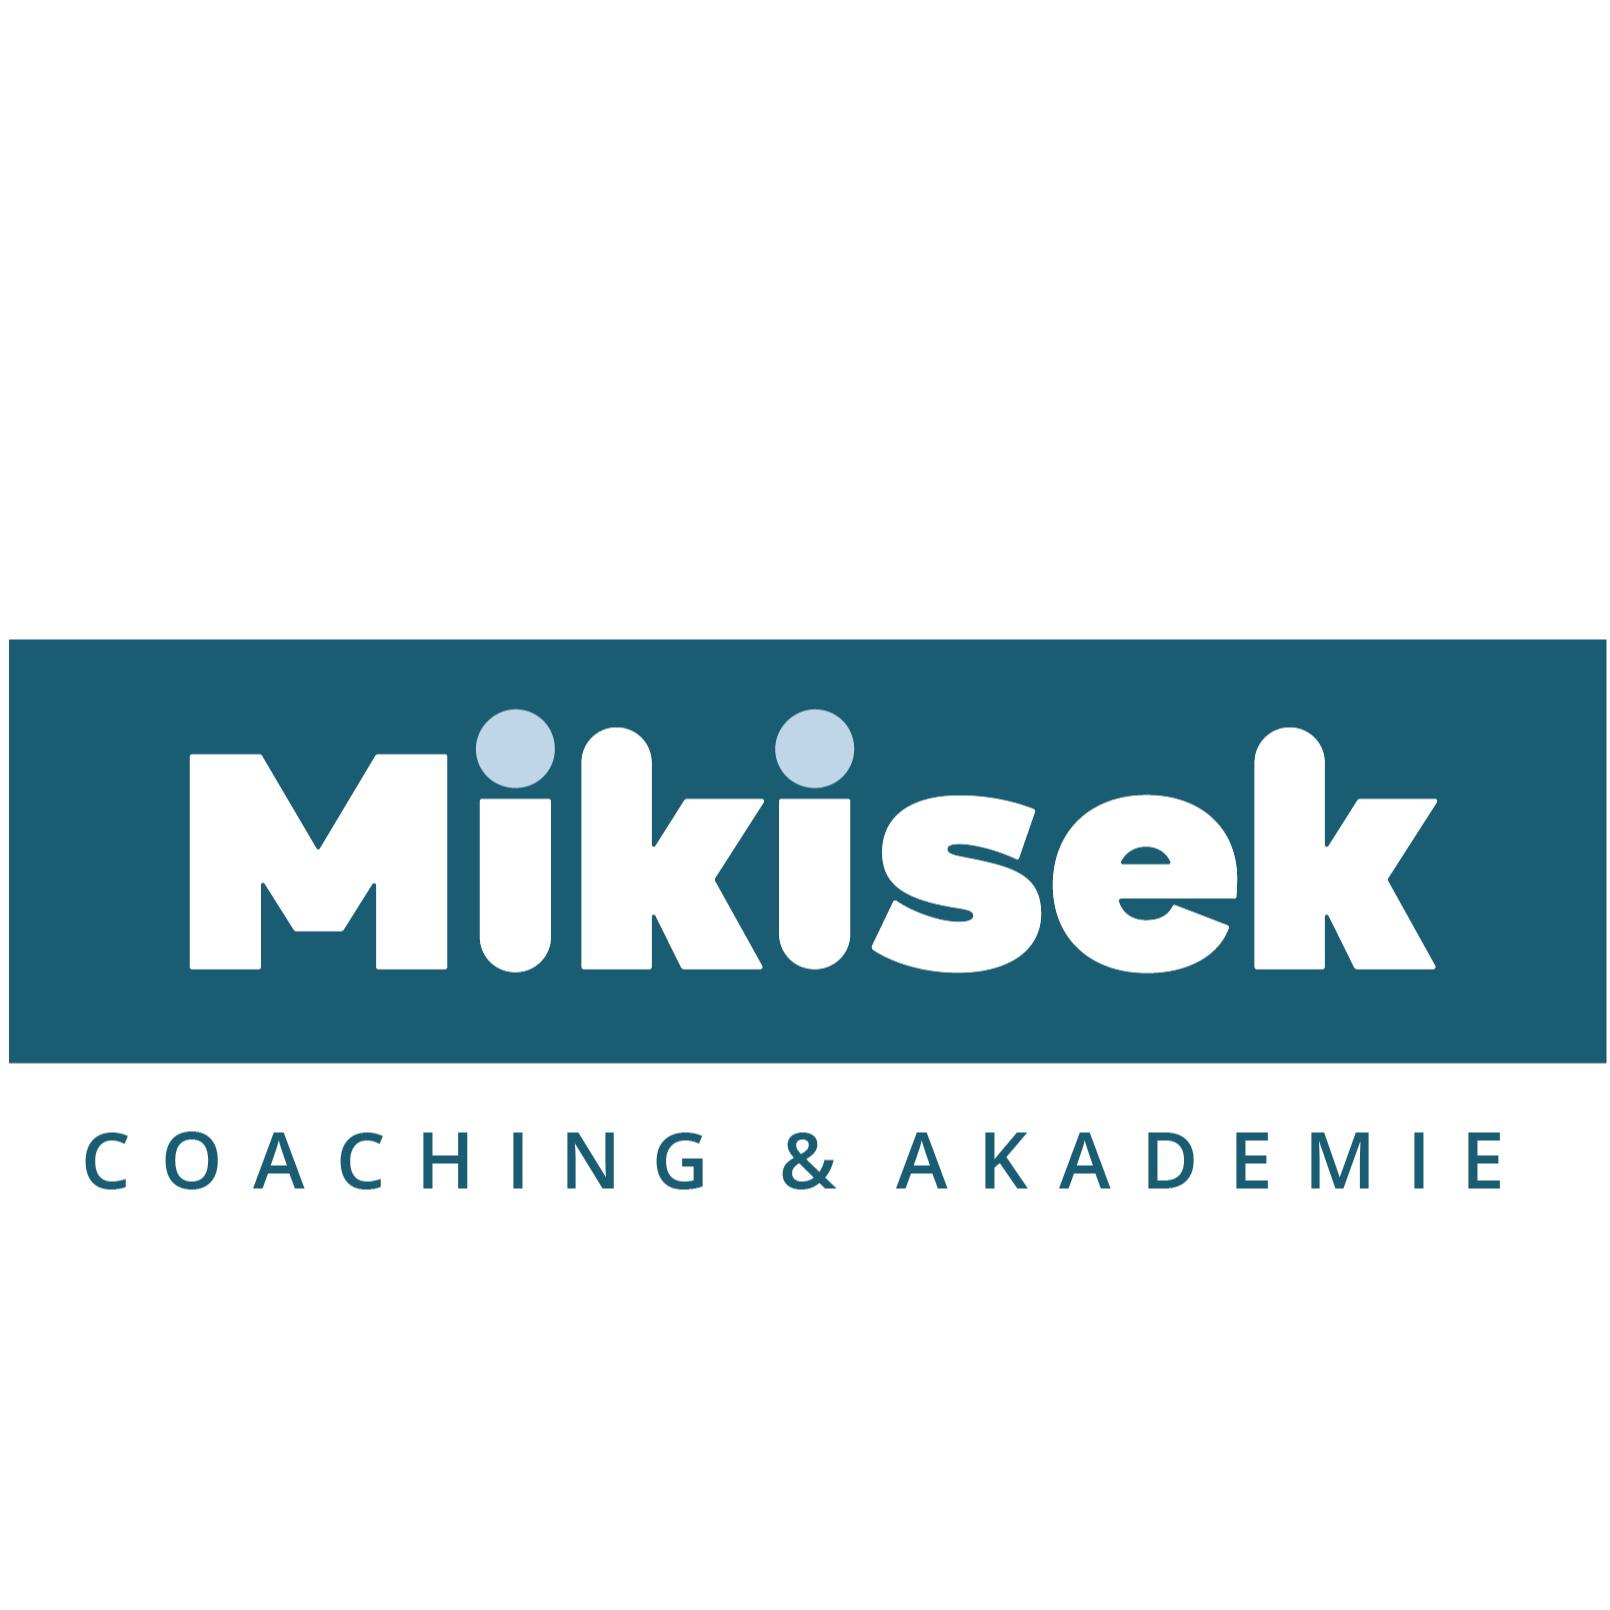 MIKISEK - Coaching & Akademie in Frankfurt am Main - Logo